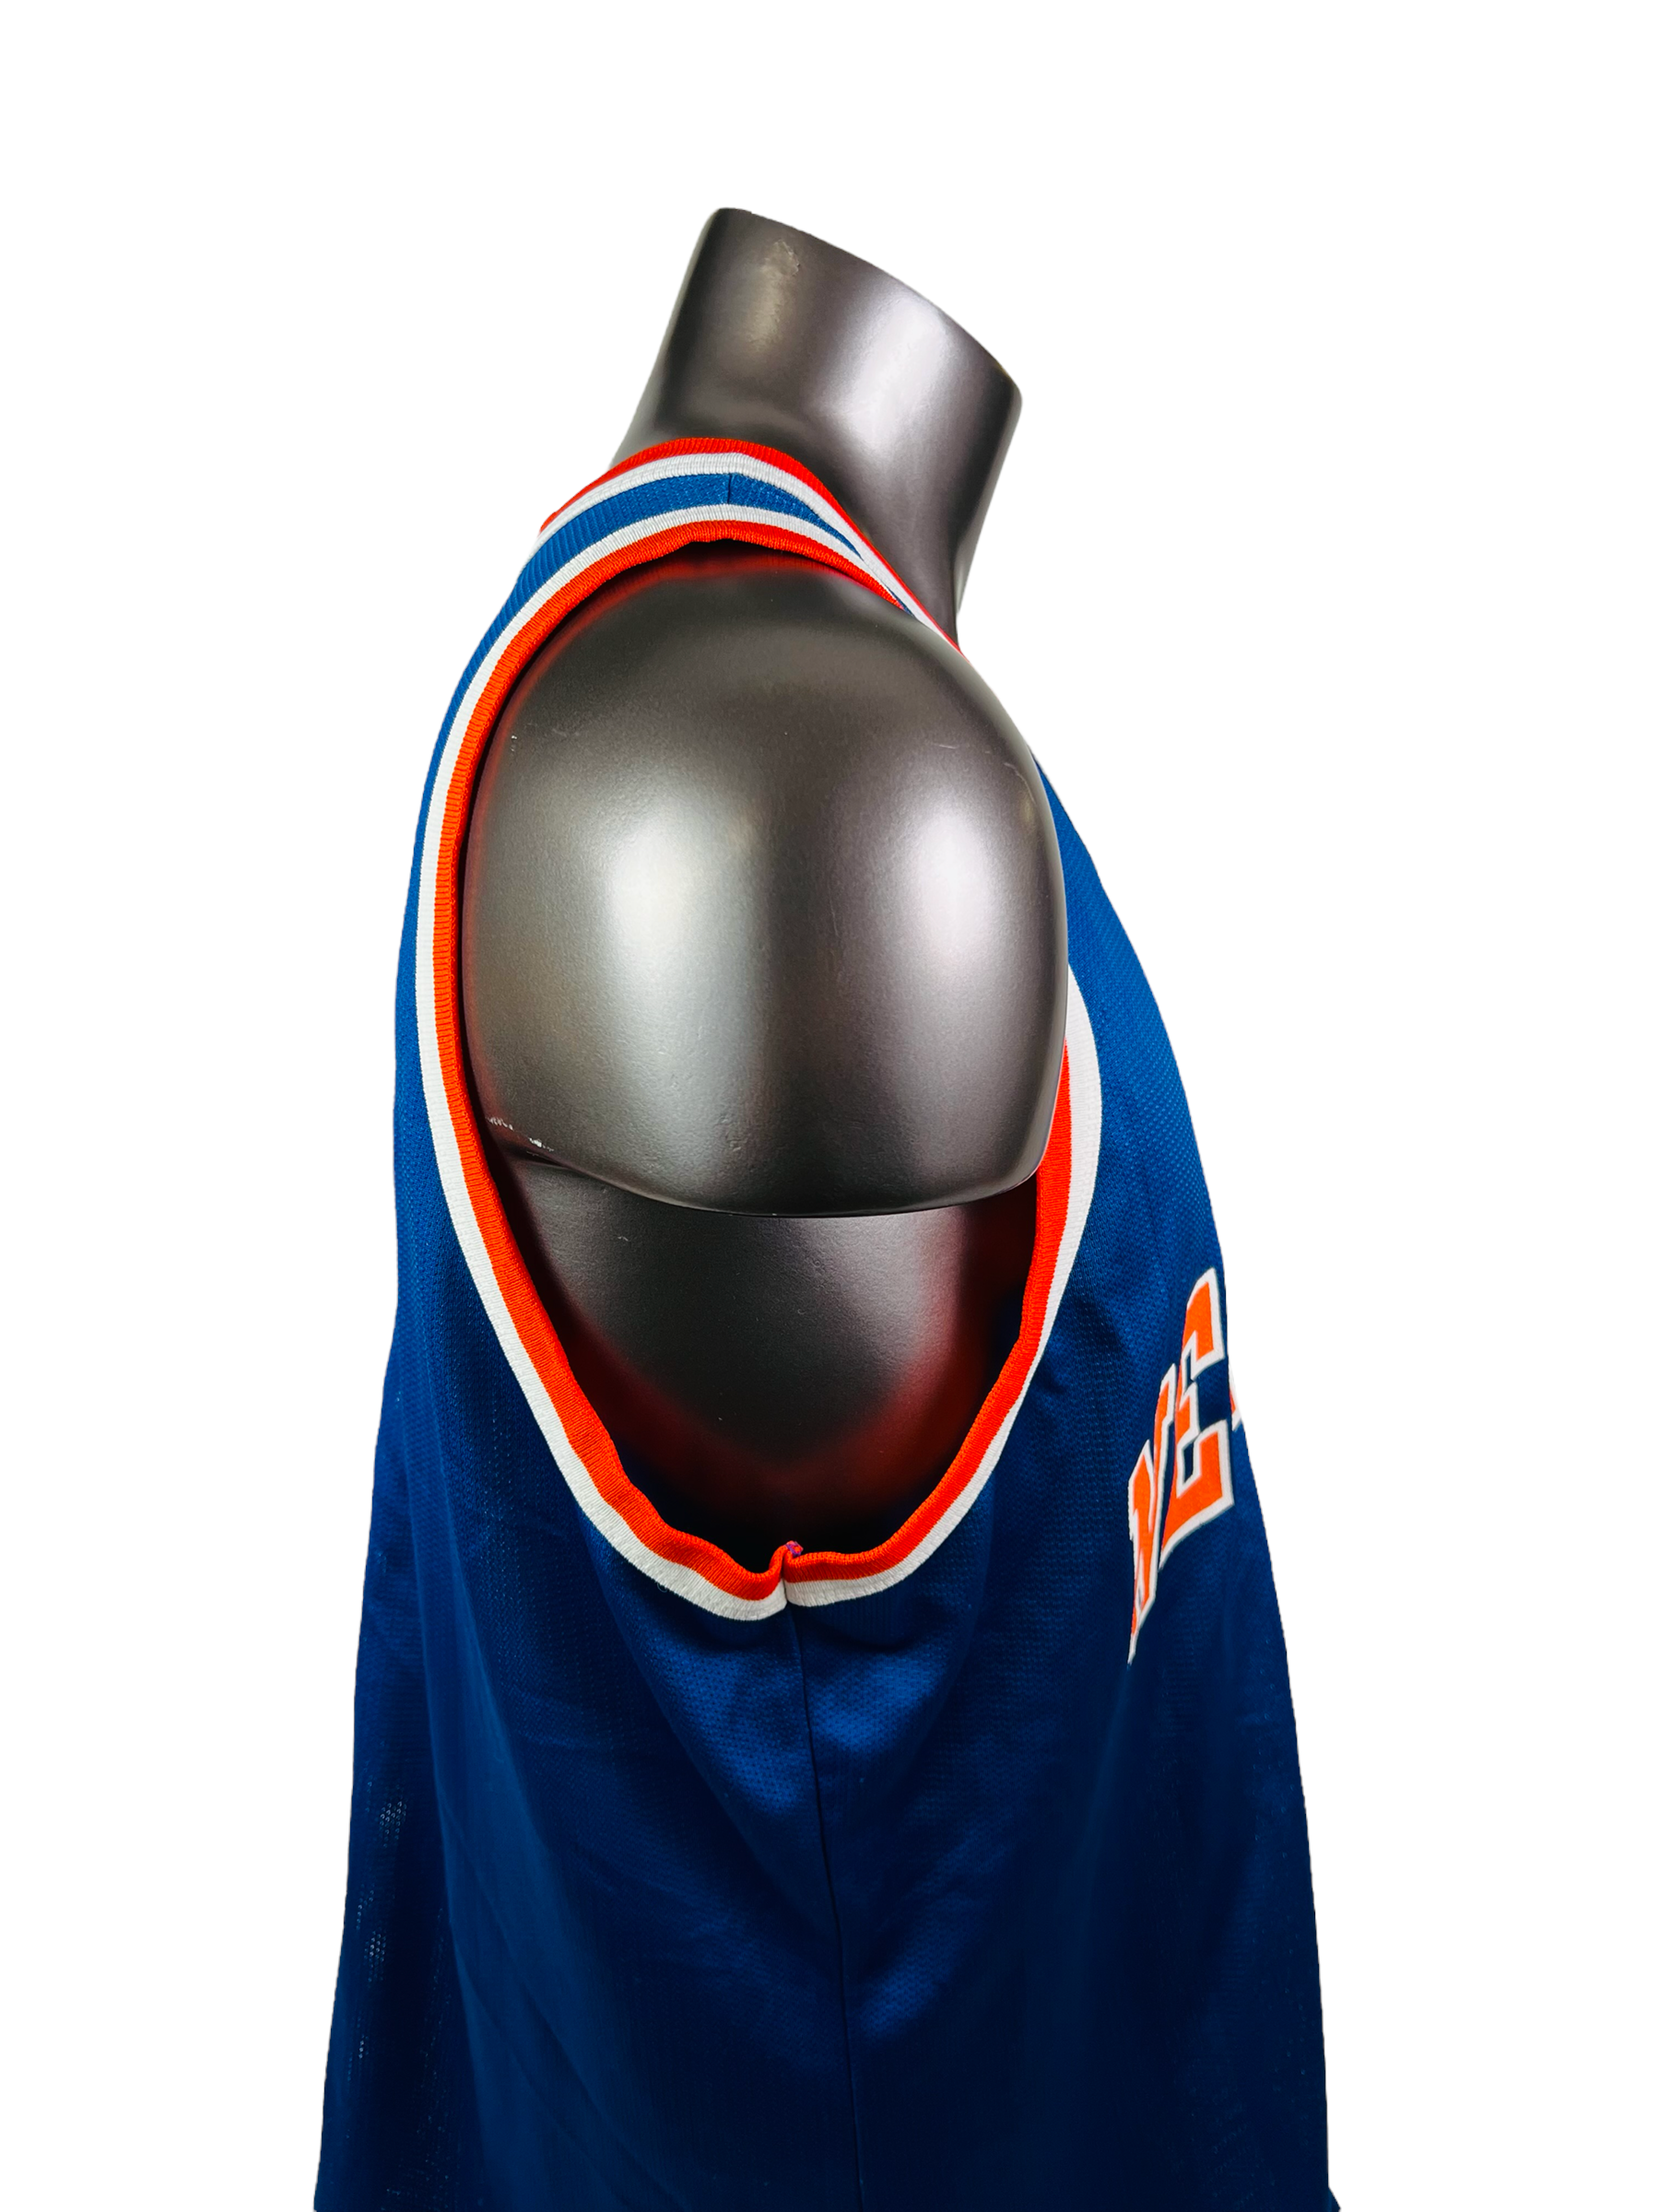 Vintage Champion New York Knicks John Starks Jersey – Santiagosports